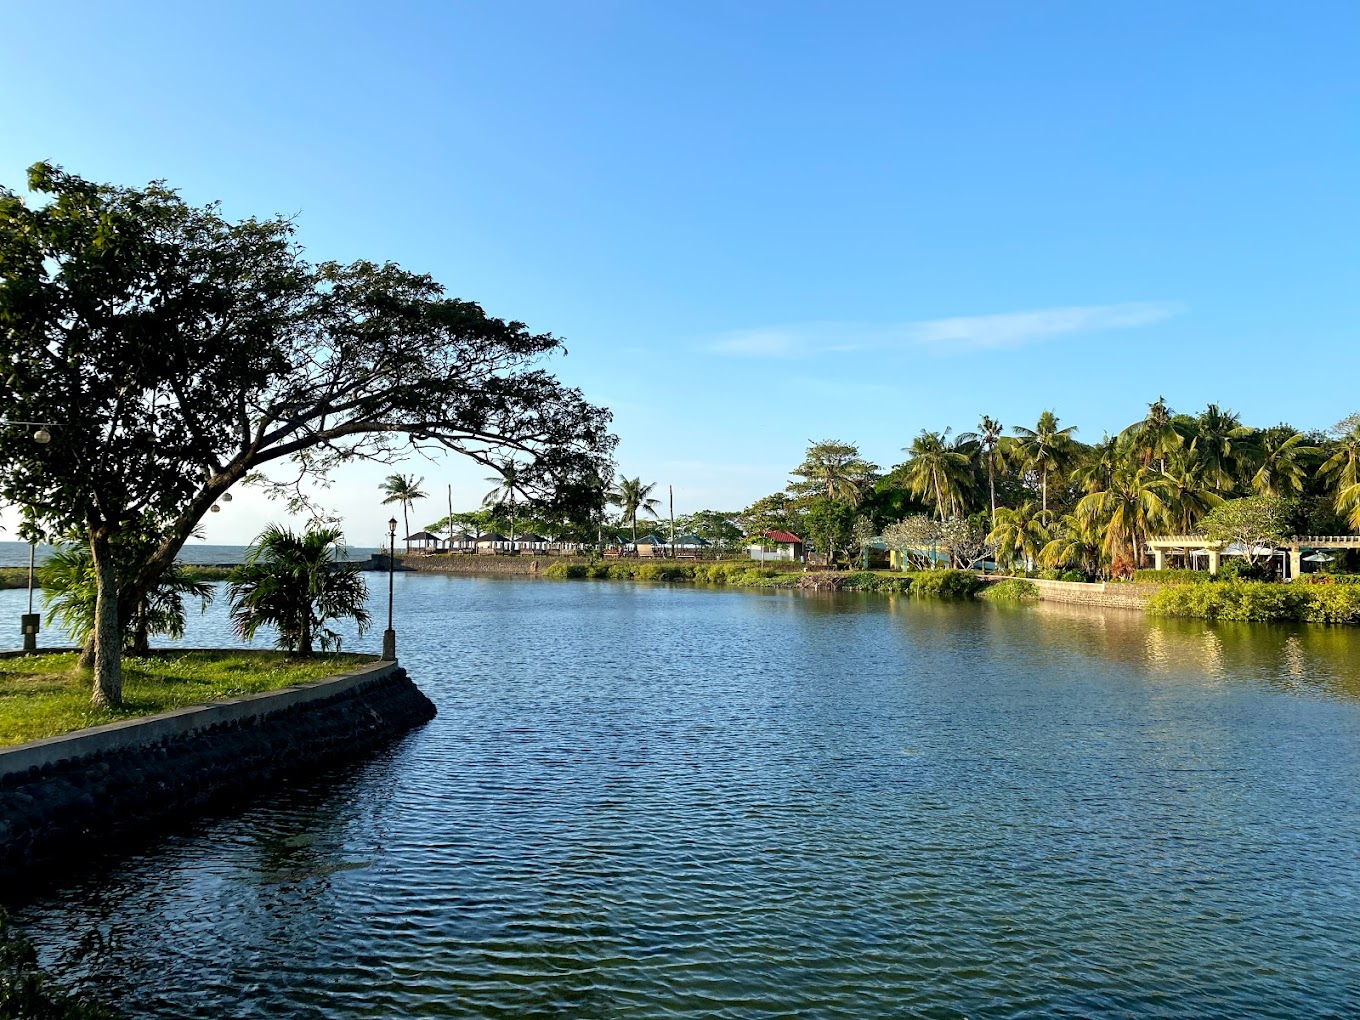 Palmas del Mar Conference Resort Hotel (Brgy. Tangub, Bacolod)